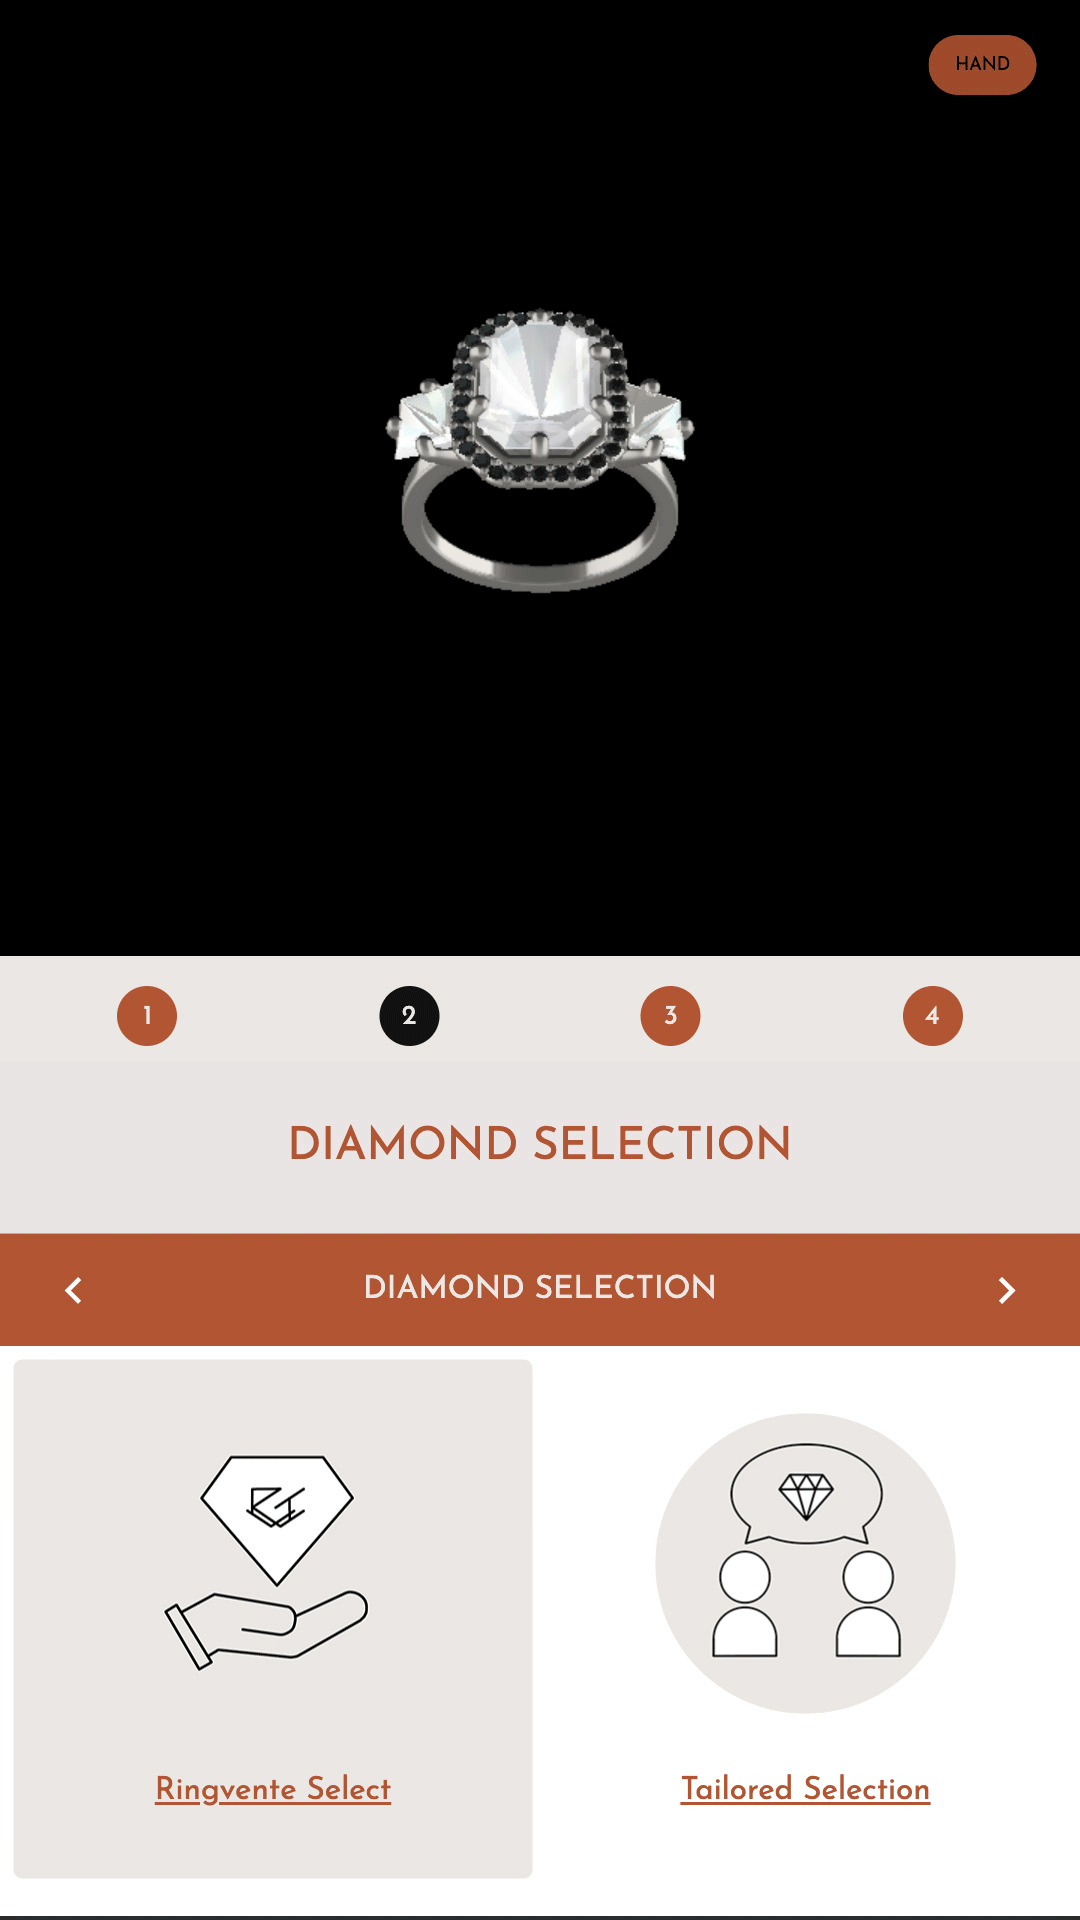 Diamond Selection Options Ringvente Select Tailored Selection 9